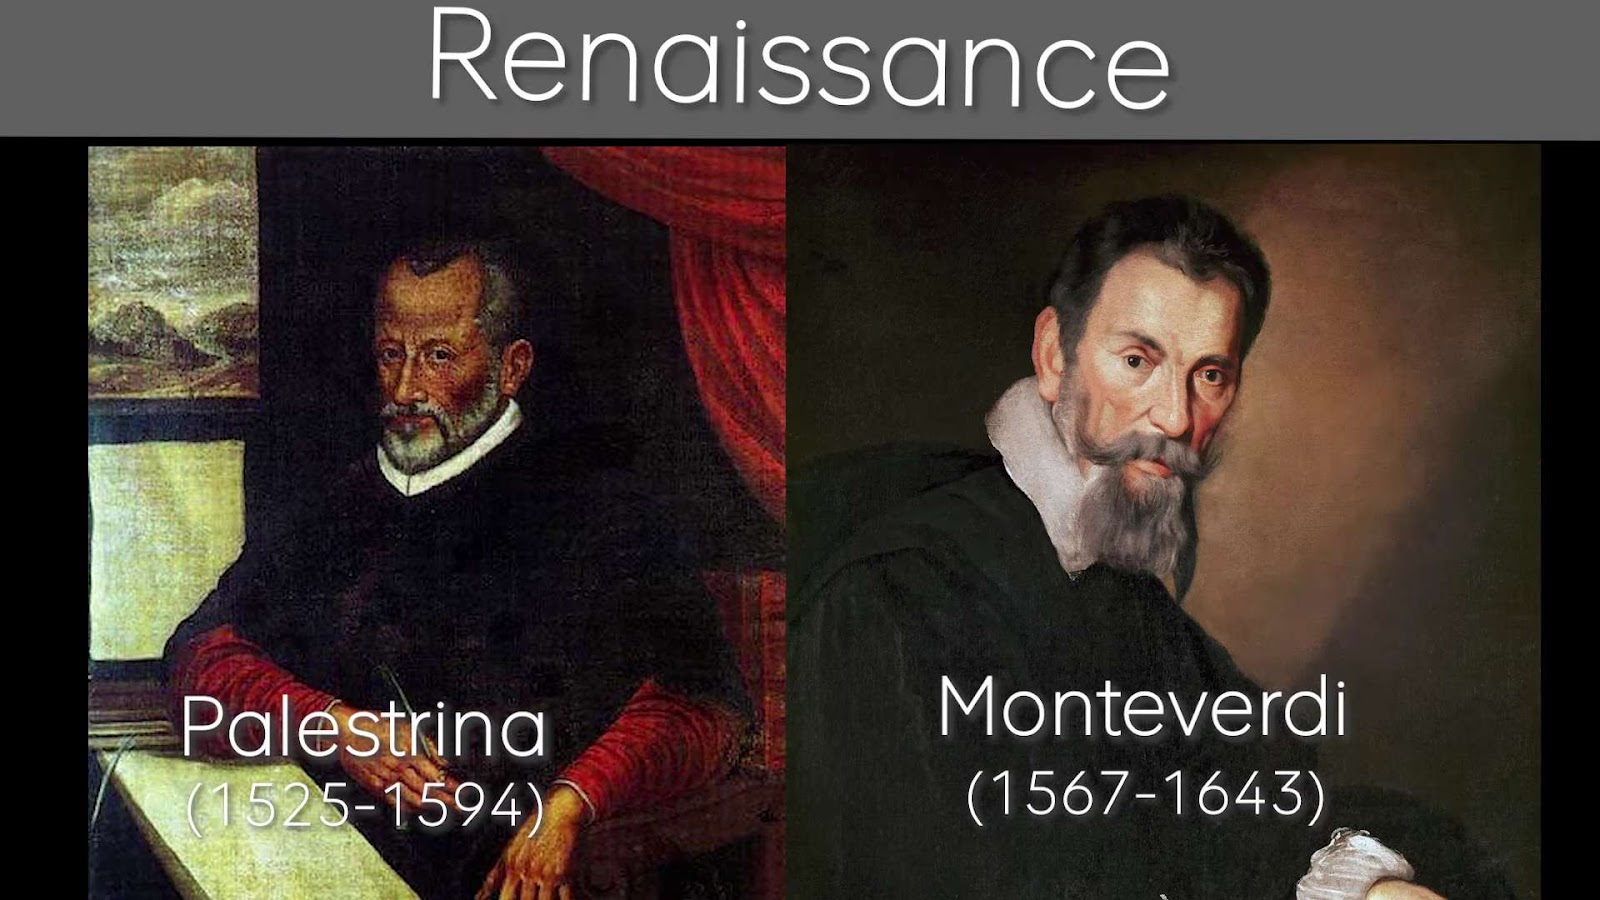 Renaissance classical music period